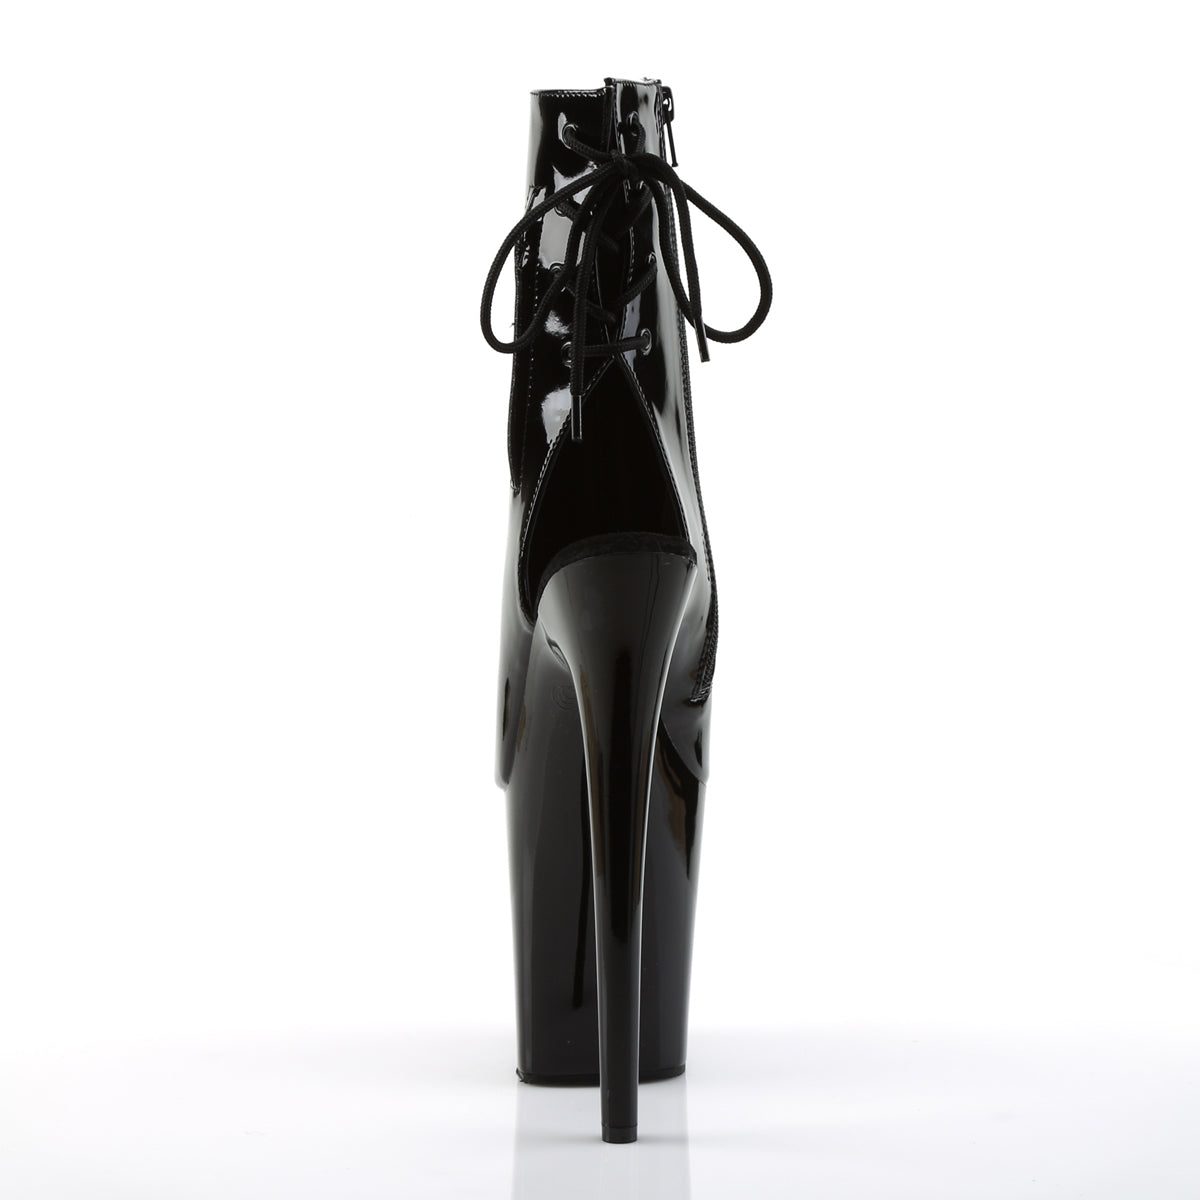 FLAMINGO-1018 Black Patent Ankle Boot Pleaser